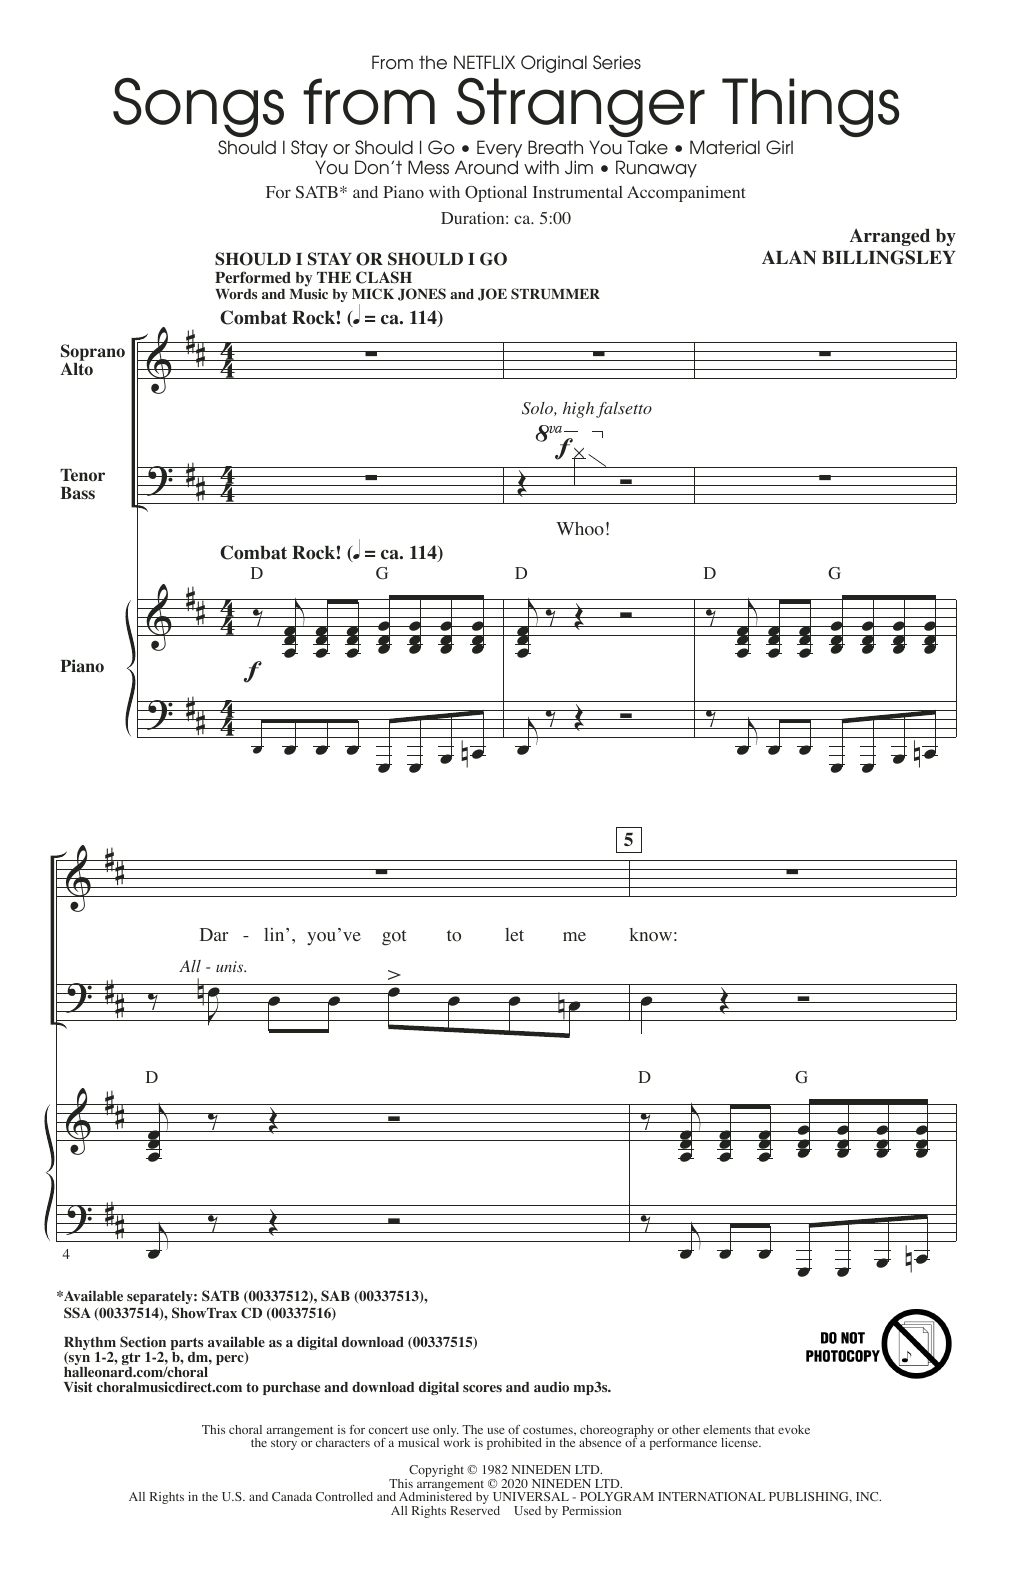 Alan Billingsley Songs from Stranger Things (arr. Alan Billingsley) Sheet Music Notes & Chords for SAB Choir - Download or Print PDF